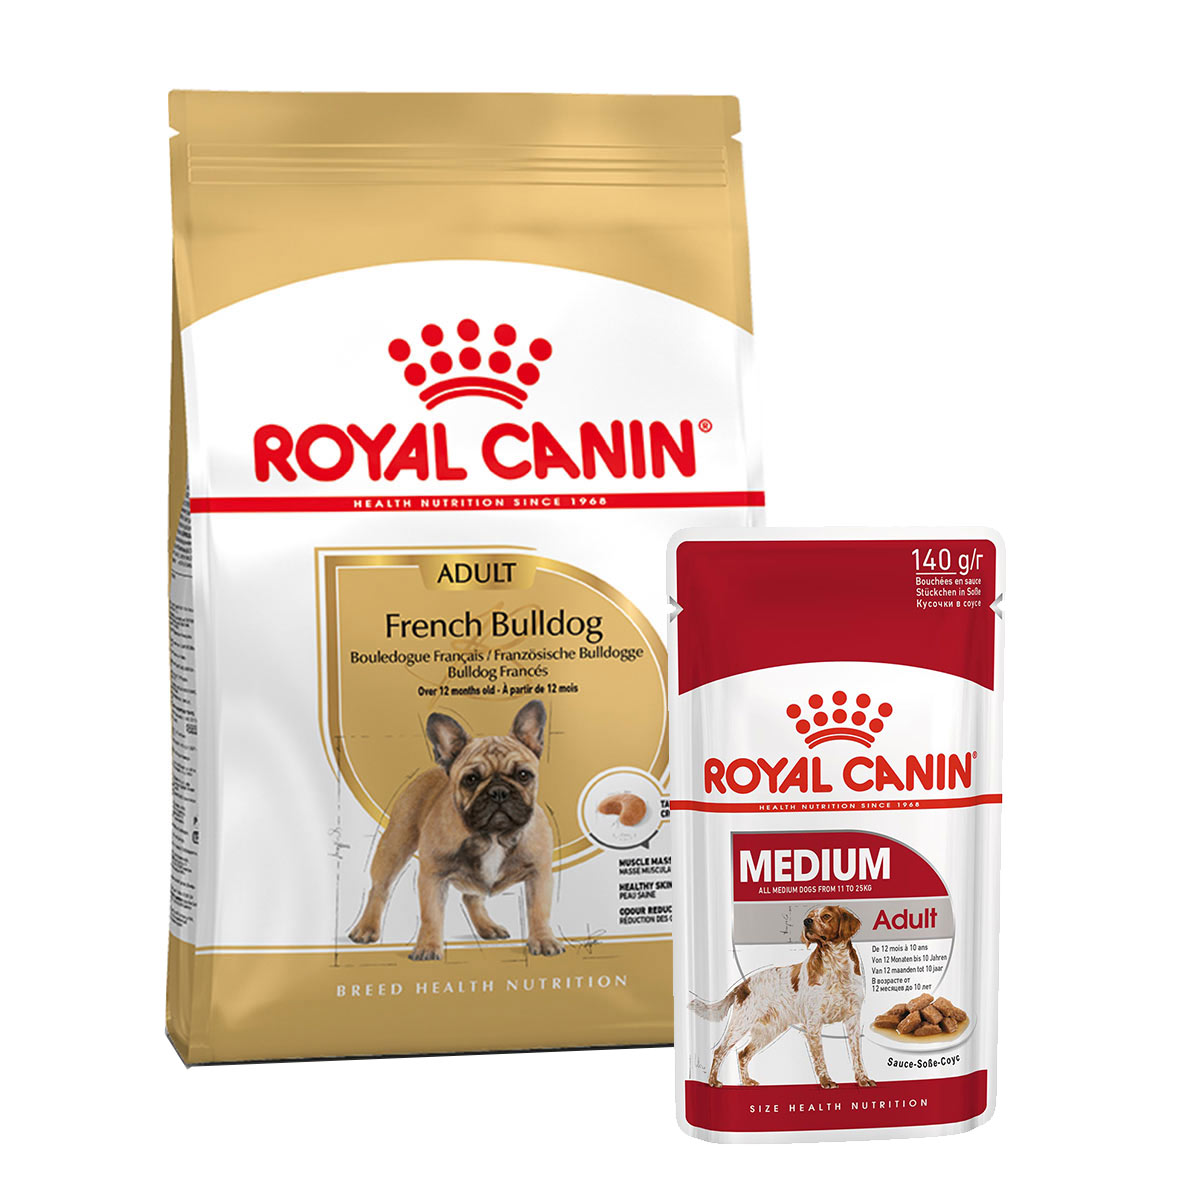 ROYAL CANIN French Bulldog Adult 3kg + Medium Adult in Soße 10x140g von Royal Canin